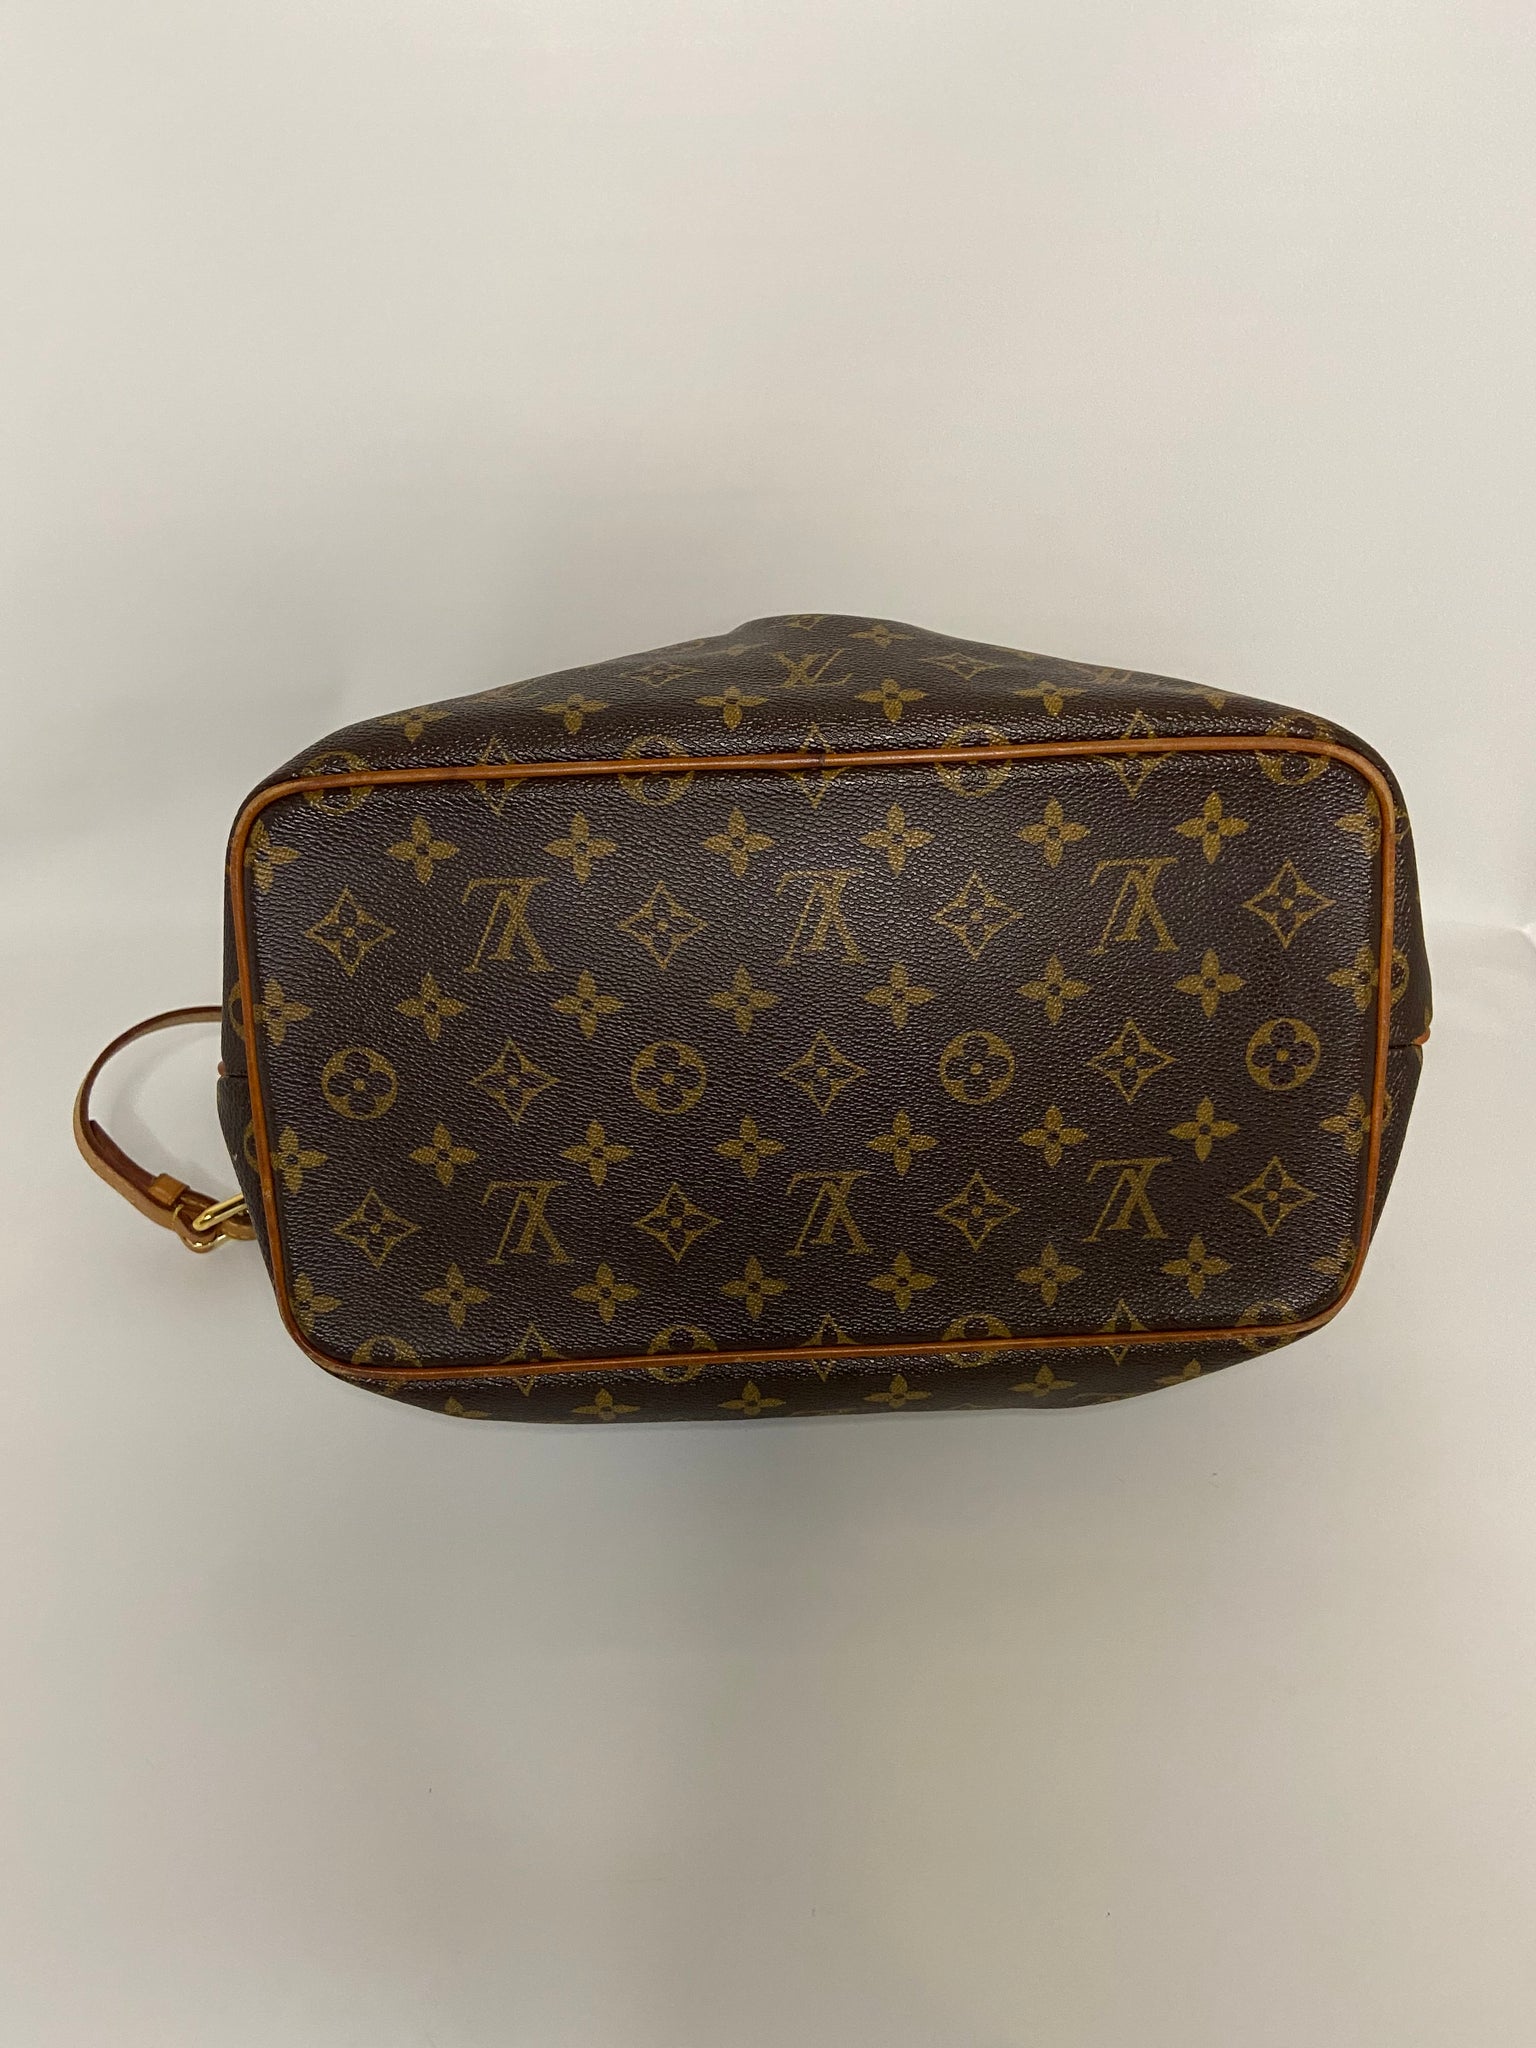 Louis Vuitton Damier Ebene Palermo Pm Bag